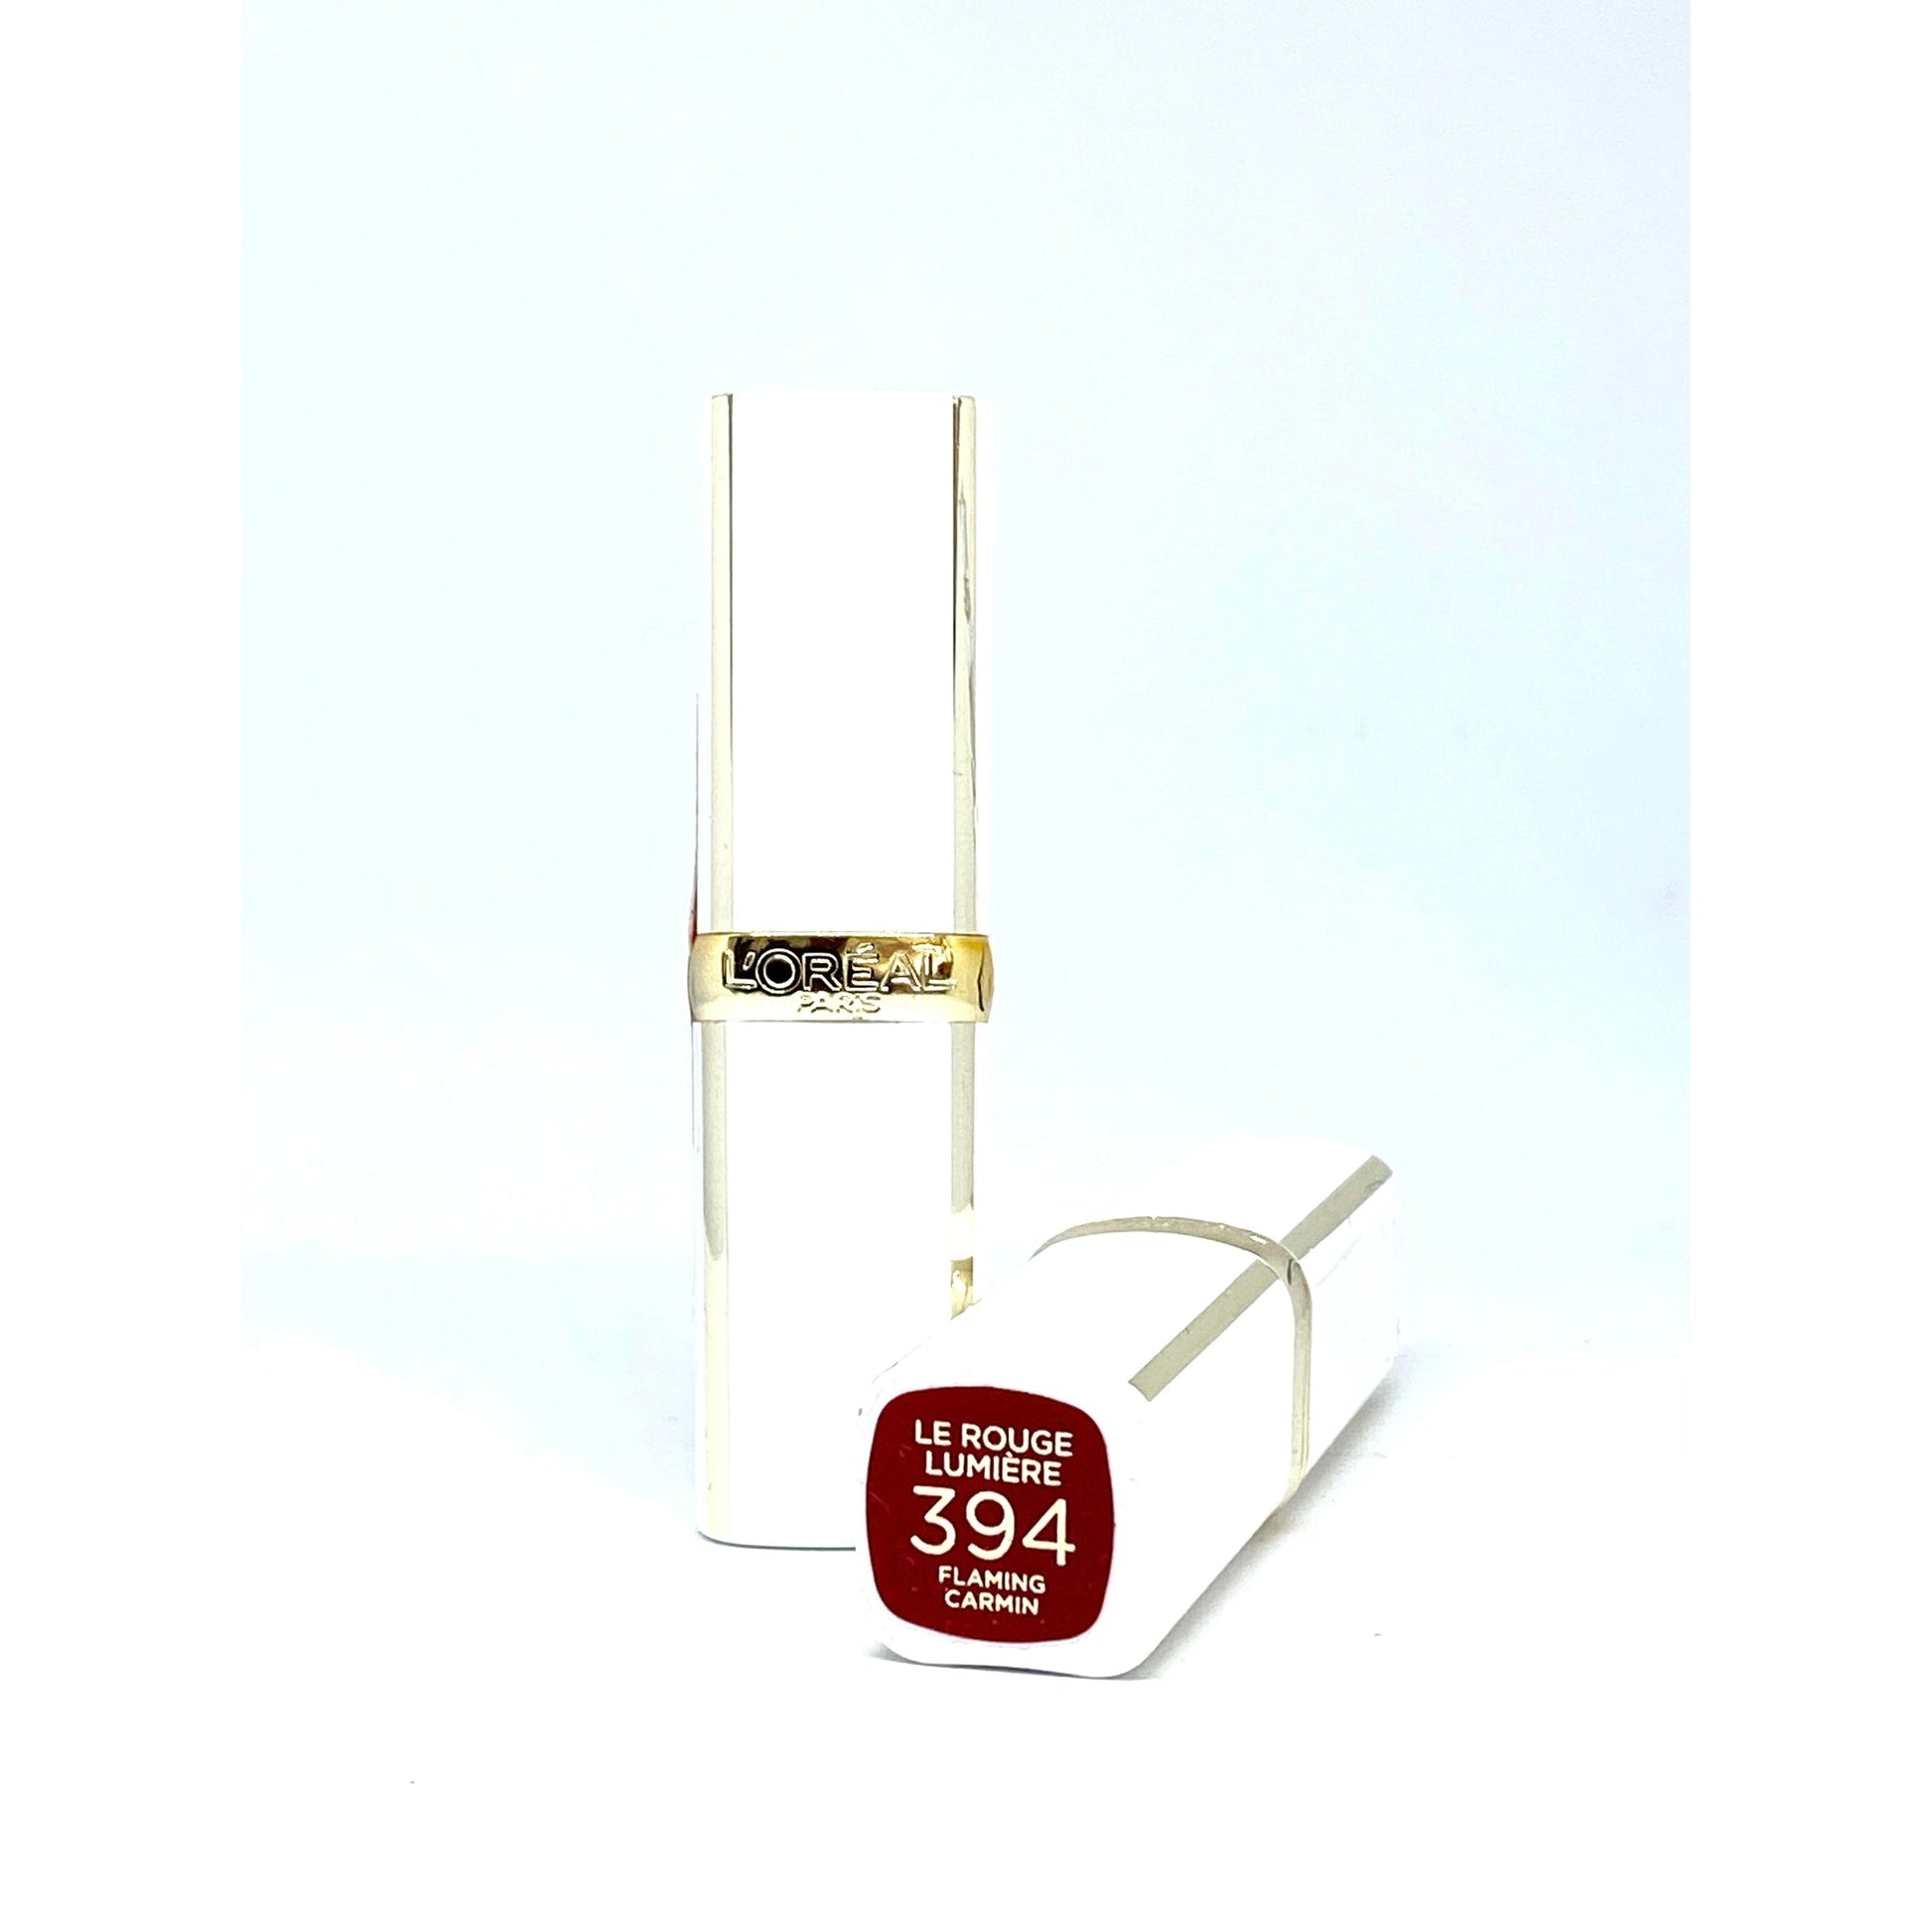 L'Oreal Le Rouge Lumiere Lipstick 394 Flaming Carmin-L'Oreal-BeautyNmakeup.co.uk